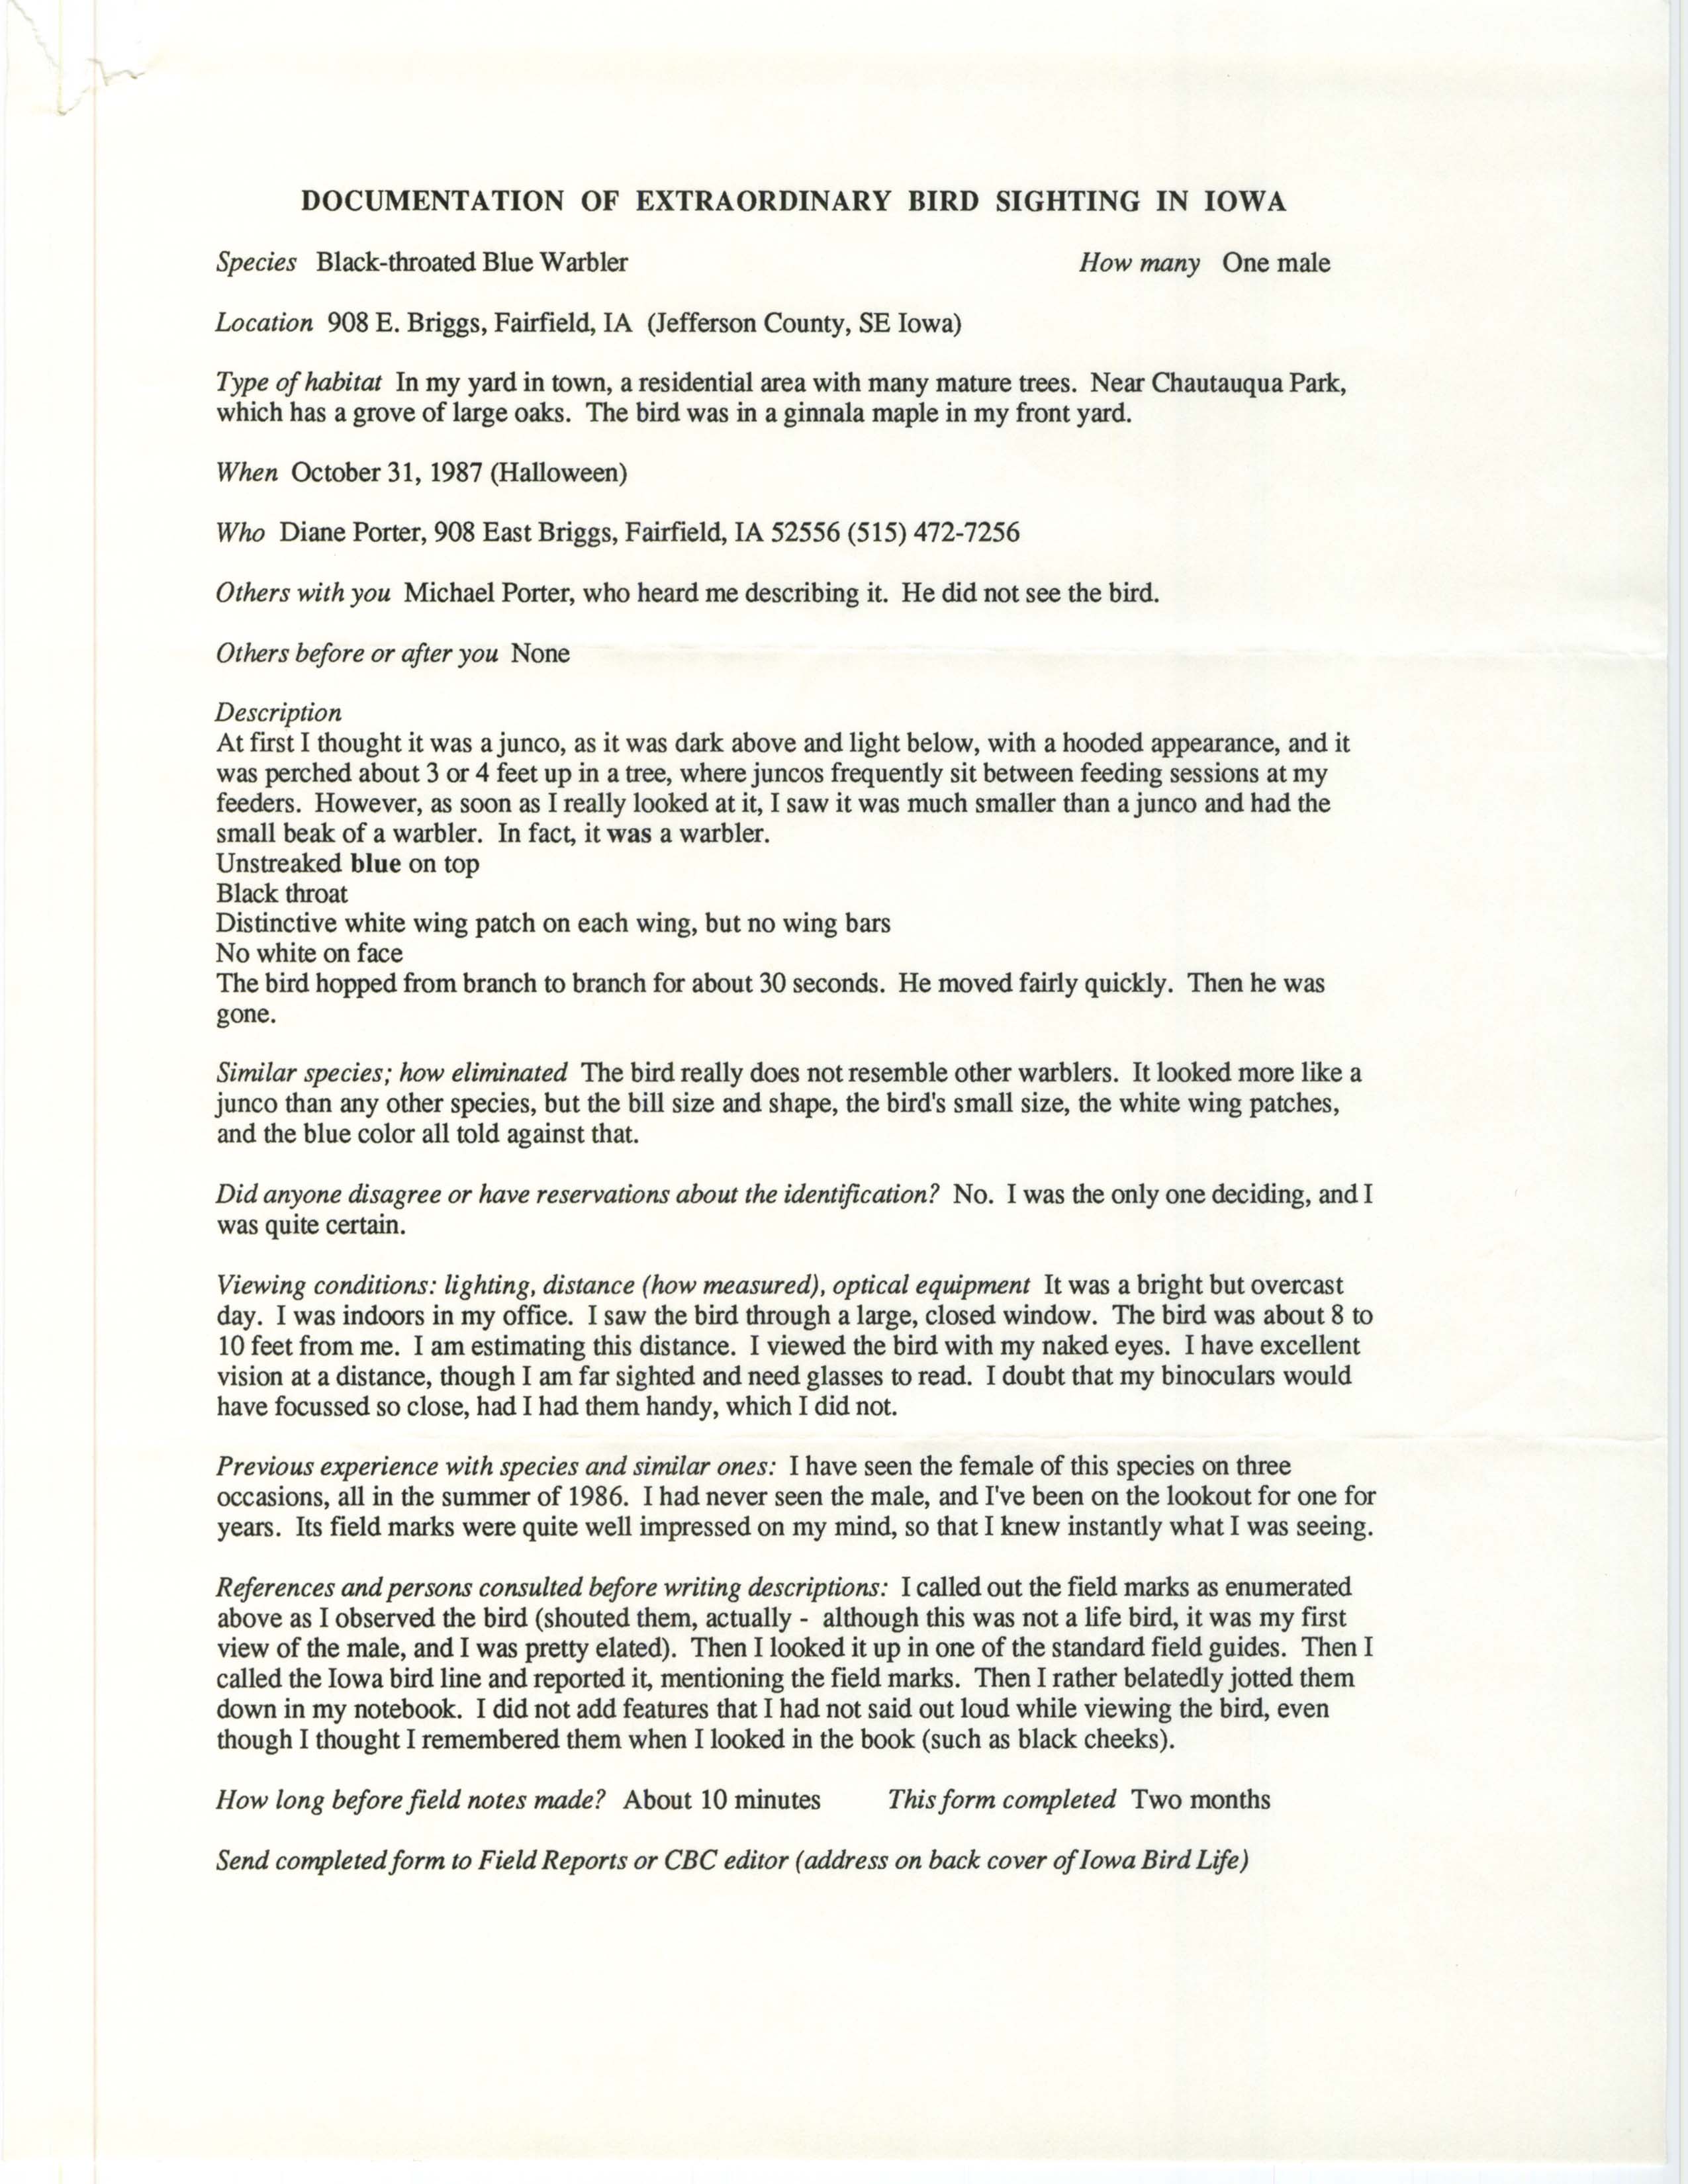 Rare bird documentation form for Black-throated Blue Warbler at Fairfield, 1987